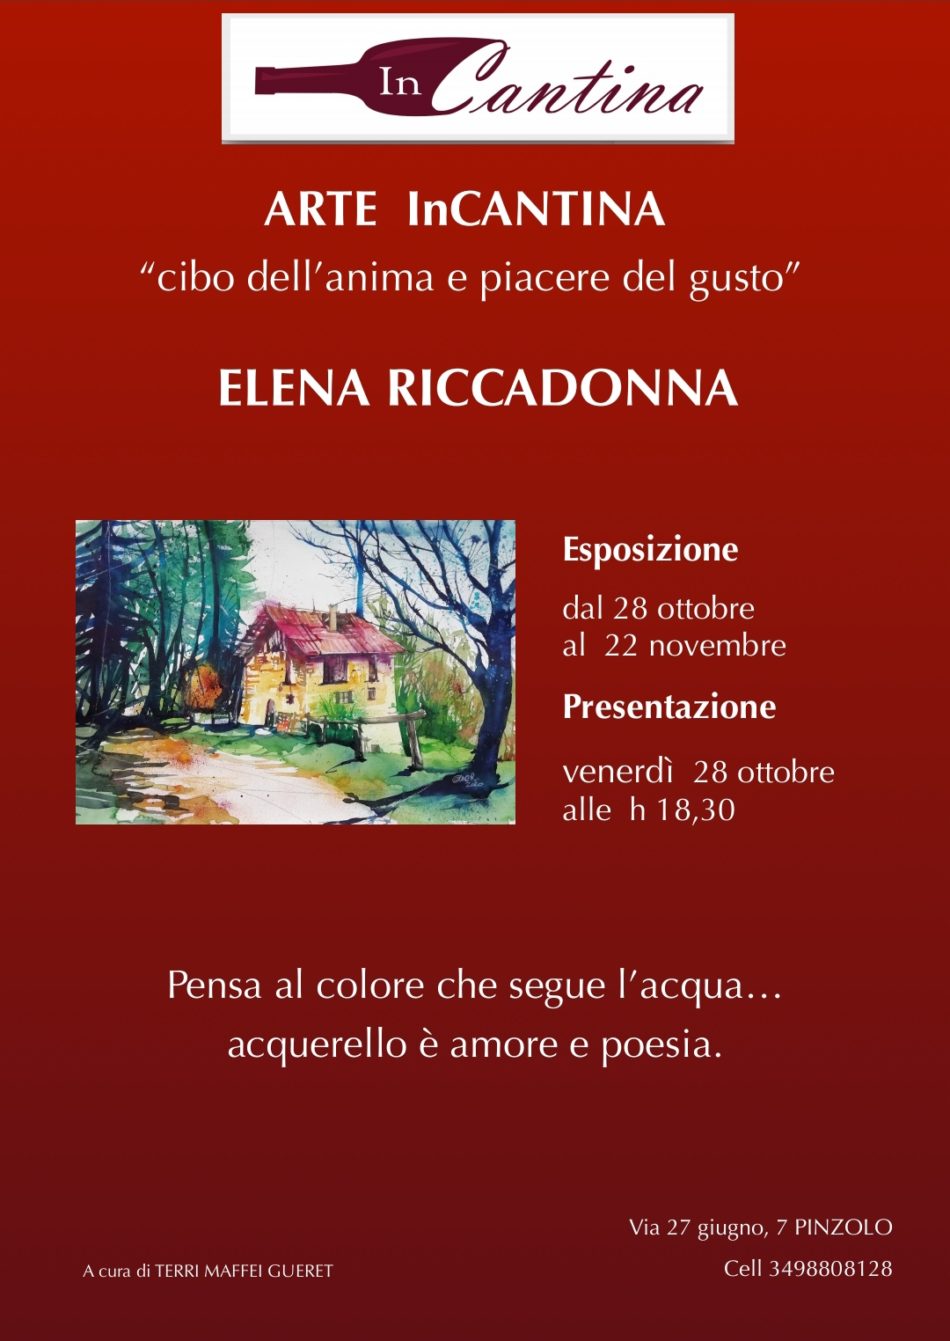 ArteInCantina: dal 28 ottobre “Elena Riccadonna”